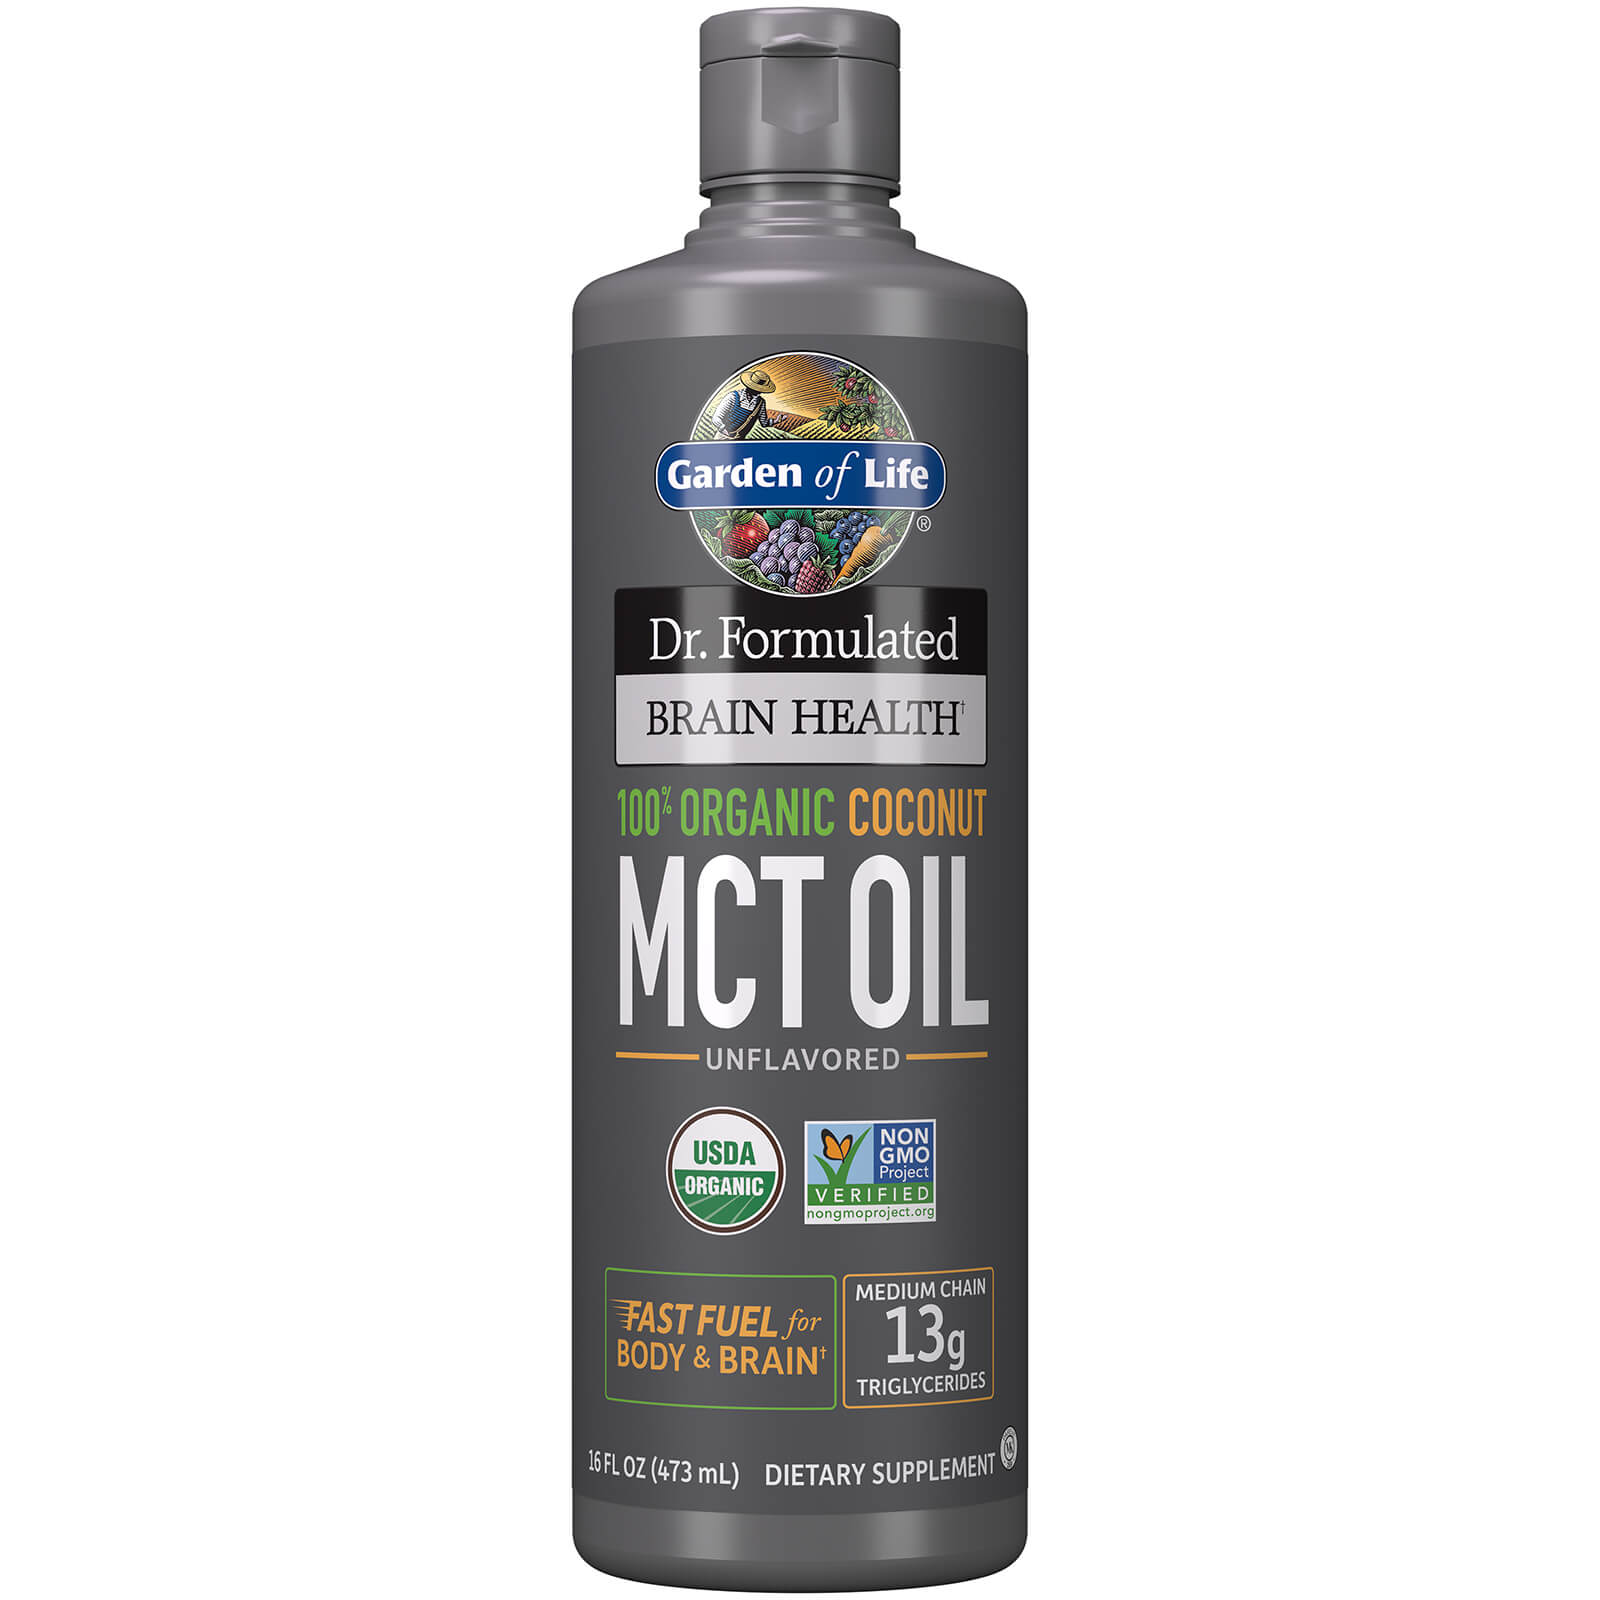 Garden of Life Dr. Formulated Brain Health Organic Coconut MCT Oil 16oz Liquid